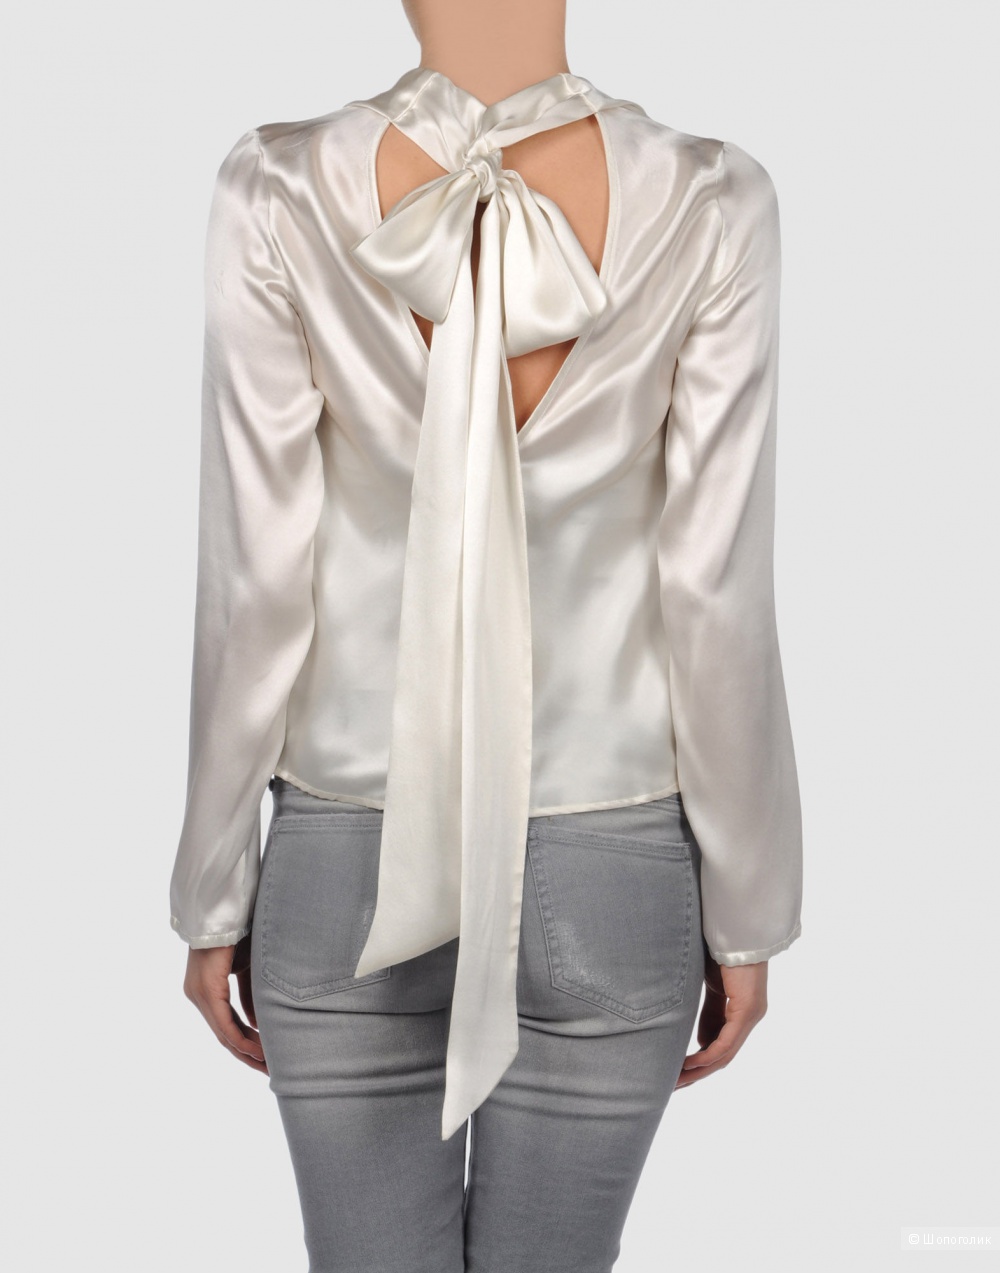 Шёлковая блузка, белая, 42IT BRIAN DALES, Италия